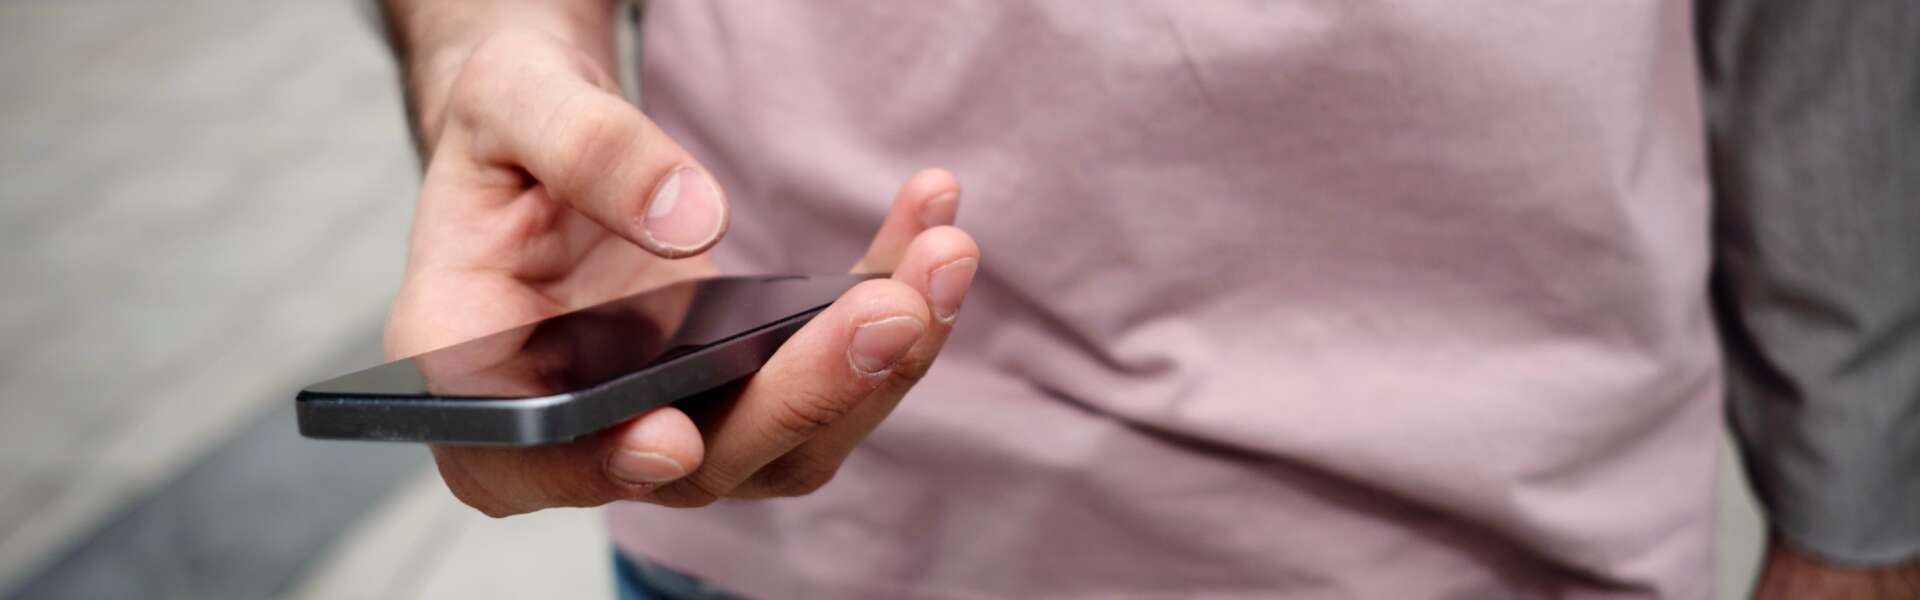 A closeup of a hand holding a cellphone